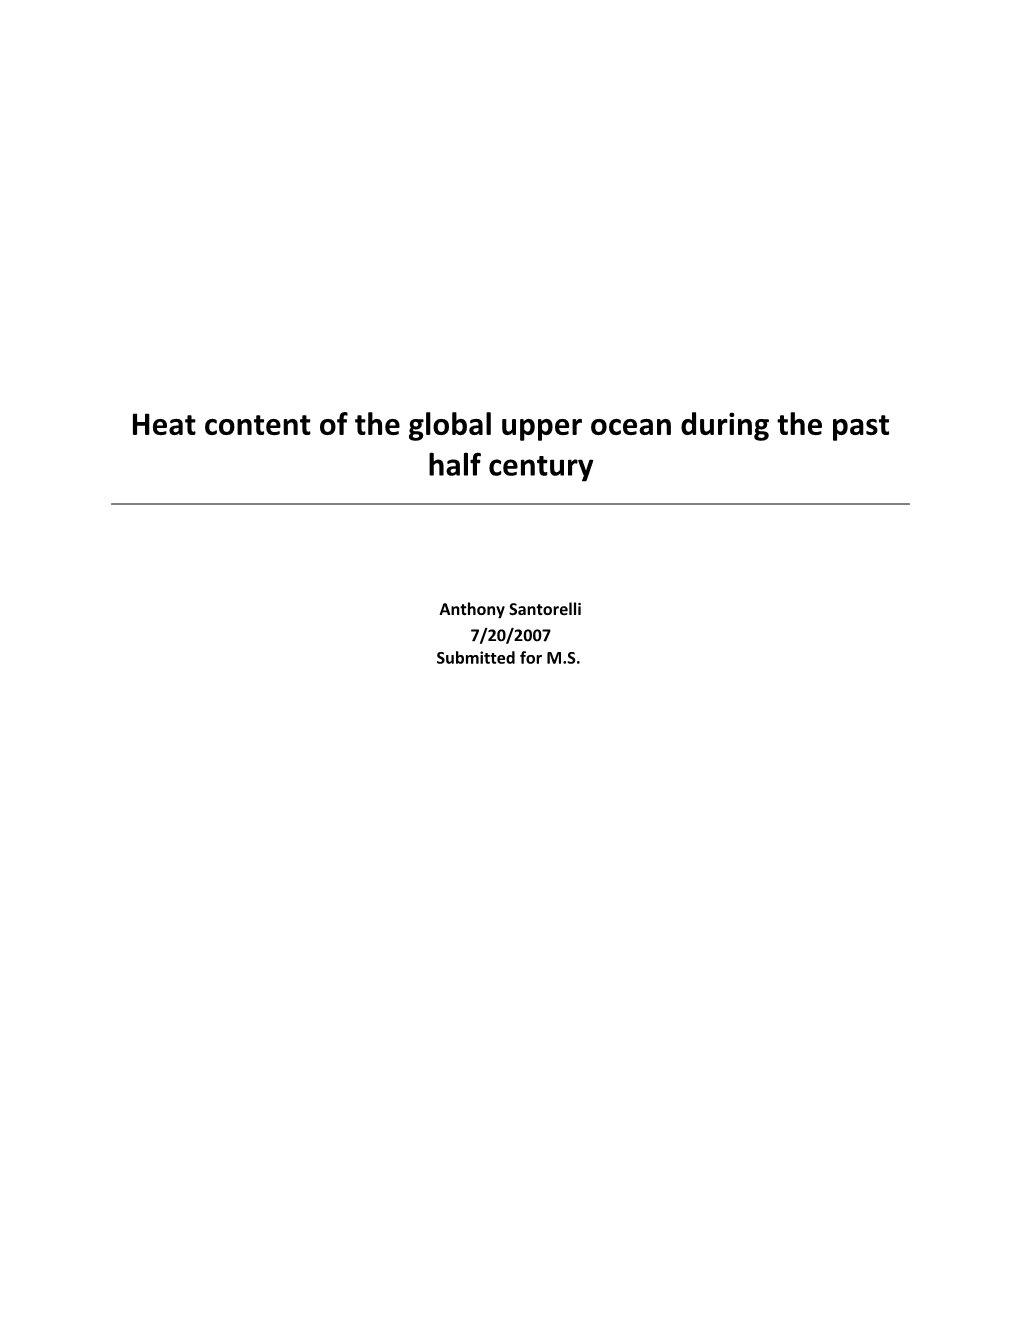 Heat Content of the Global Upper Ocean During the Past Half Century